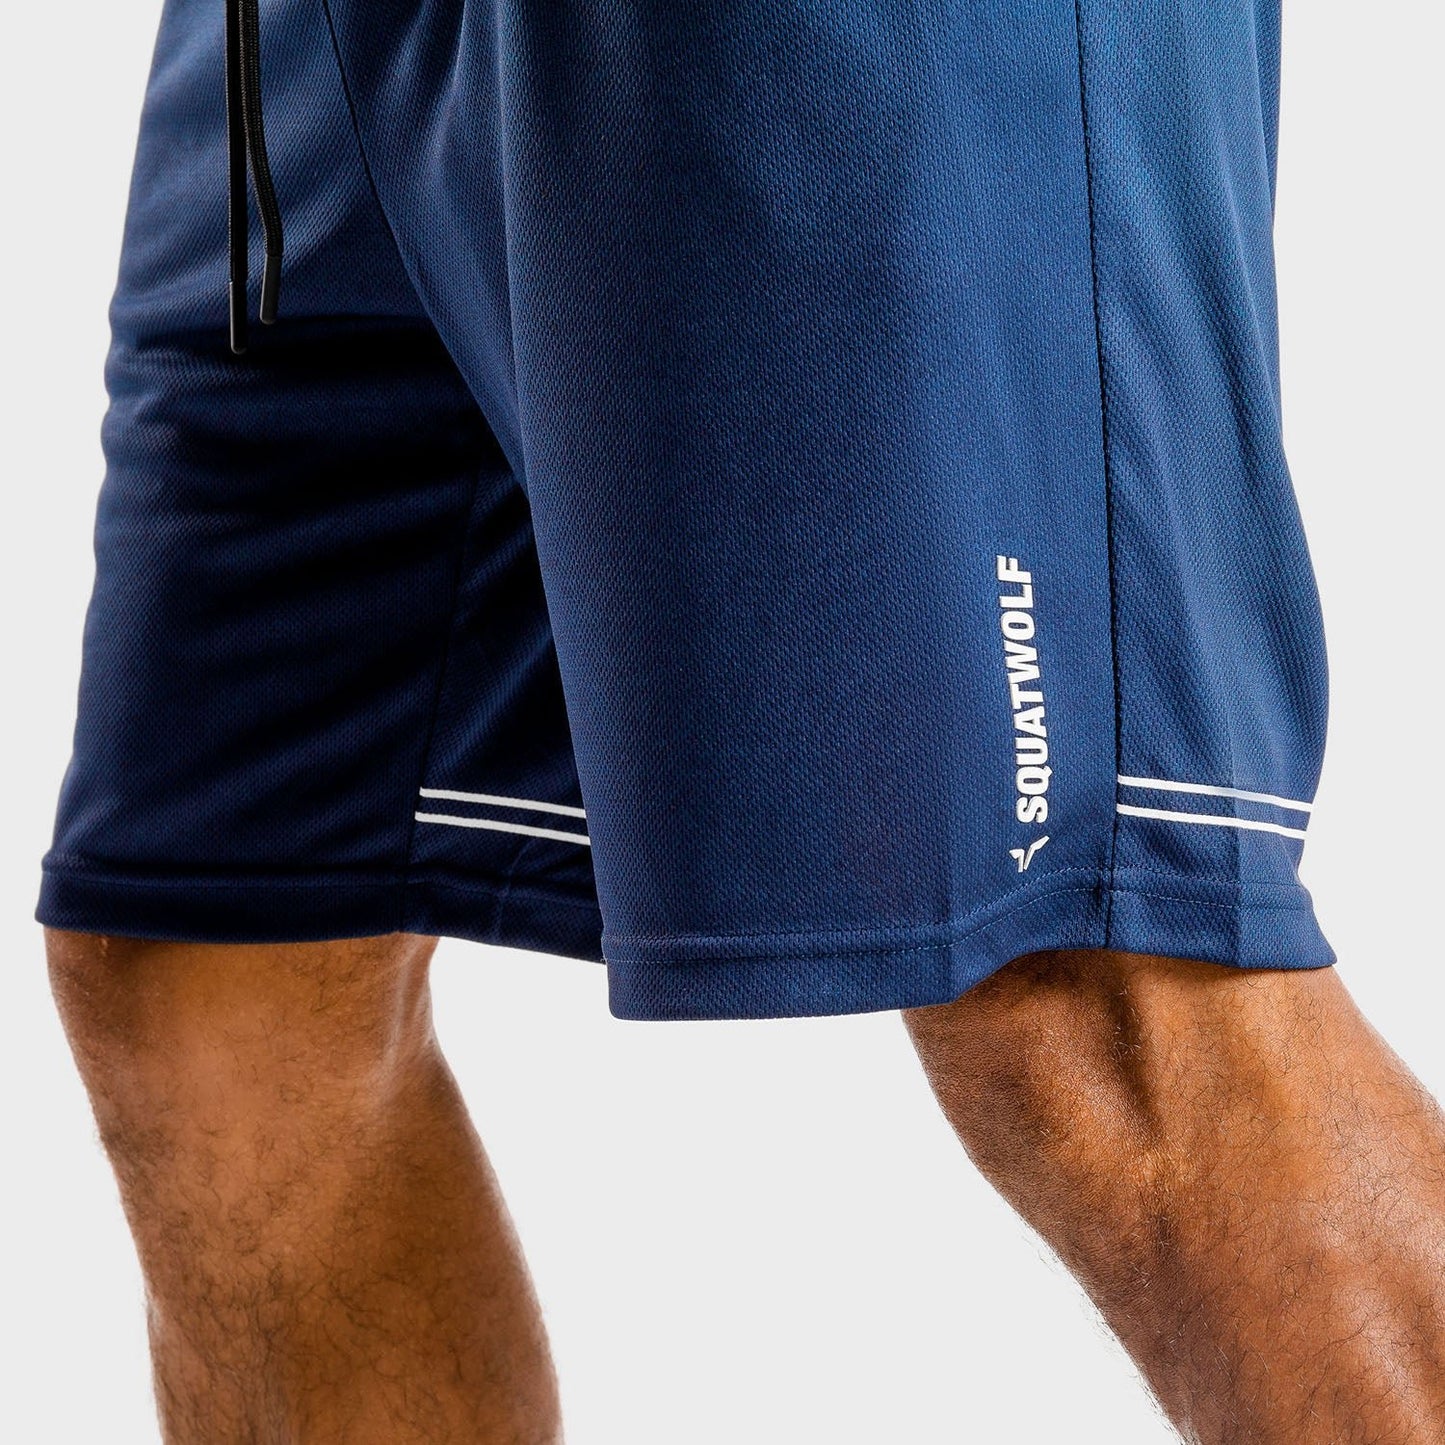 squatwolf-workout-short-for-men-flux-basketball-shorts-navy-gym-wear